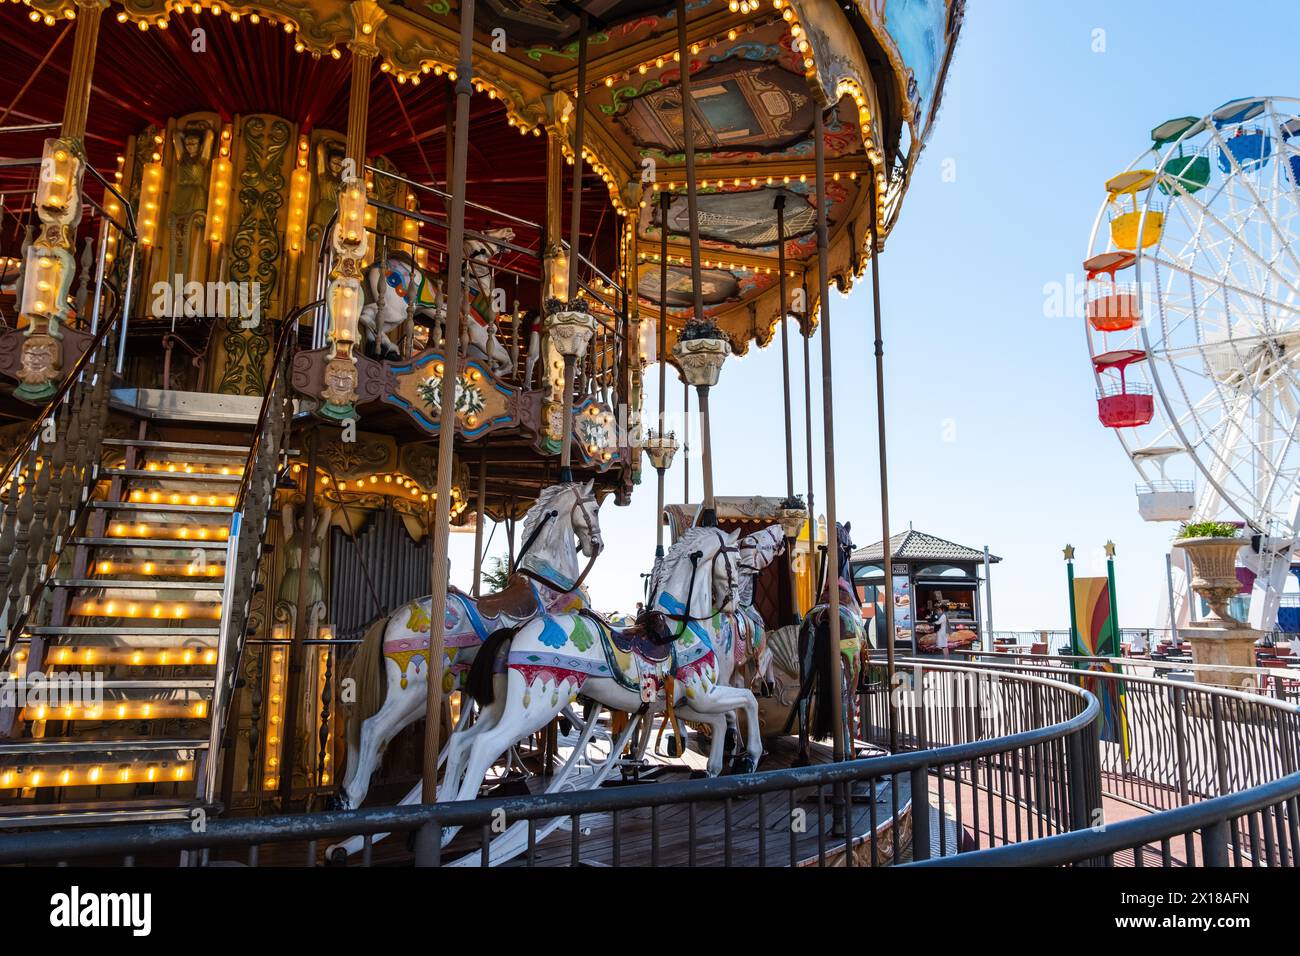 Parc d'atraccions Tibidabo amusement park in Barcelona, Spain Stock Photo